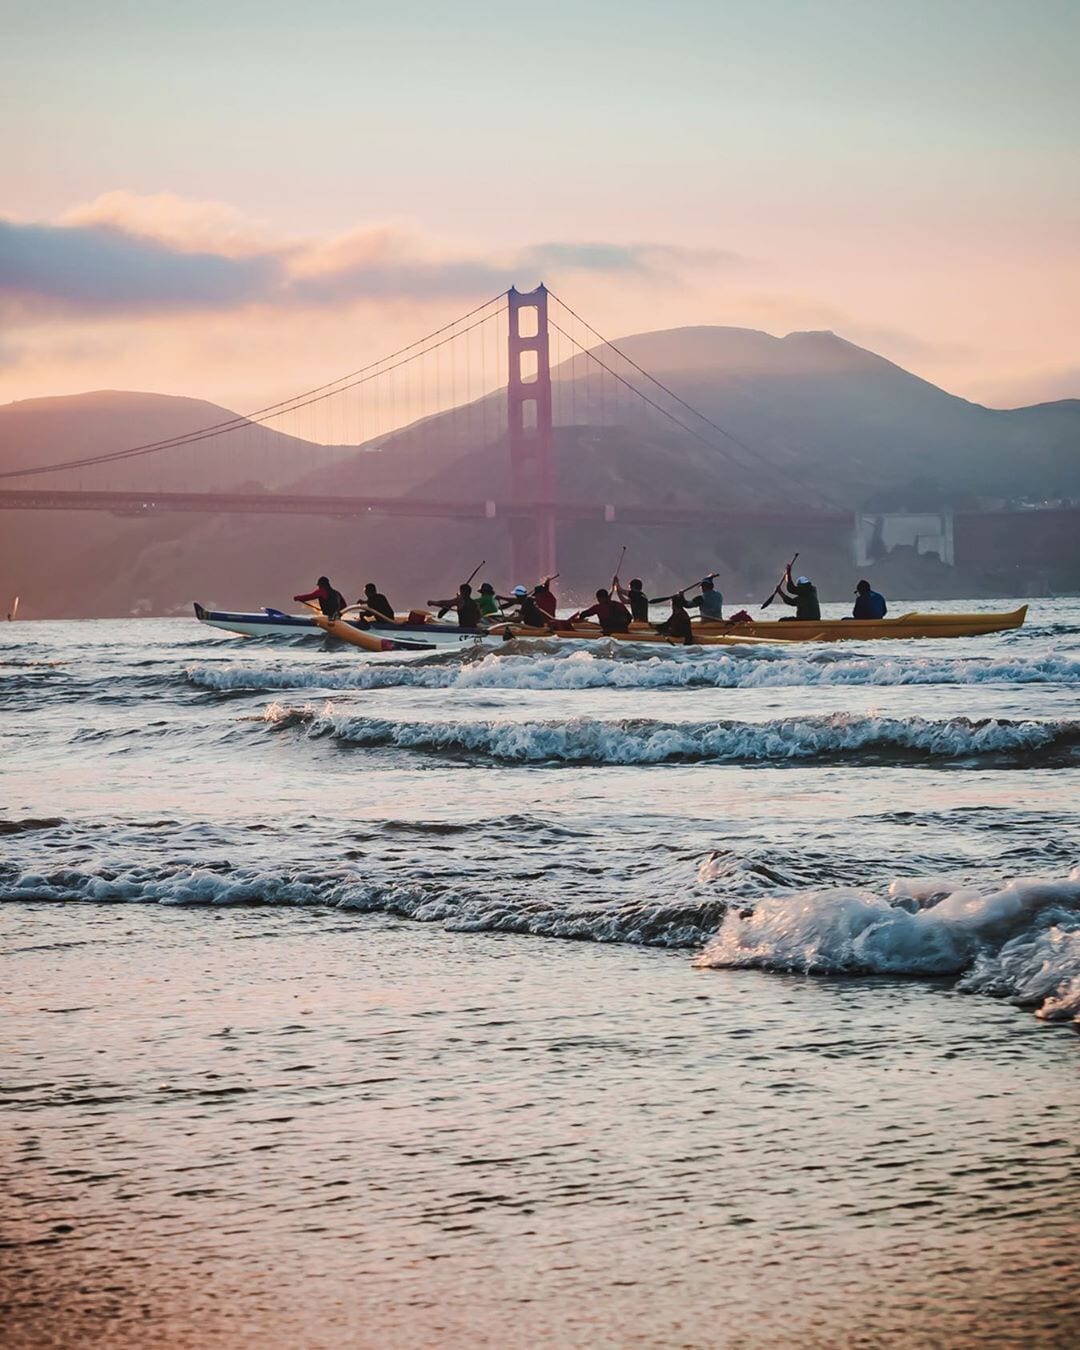 Rowers beneath the Golden Gate Bridge in San Francisco